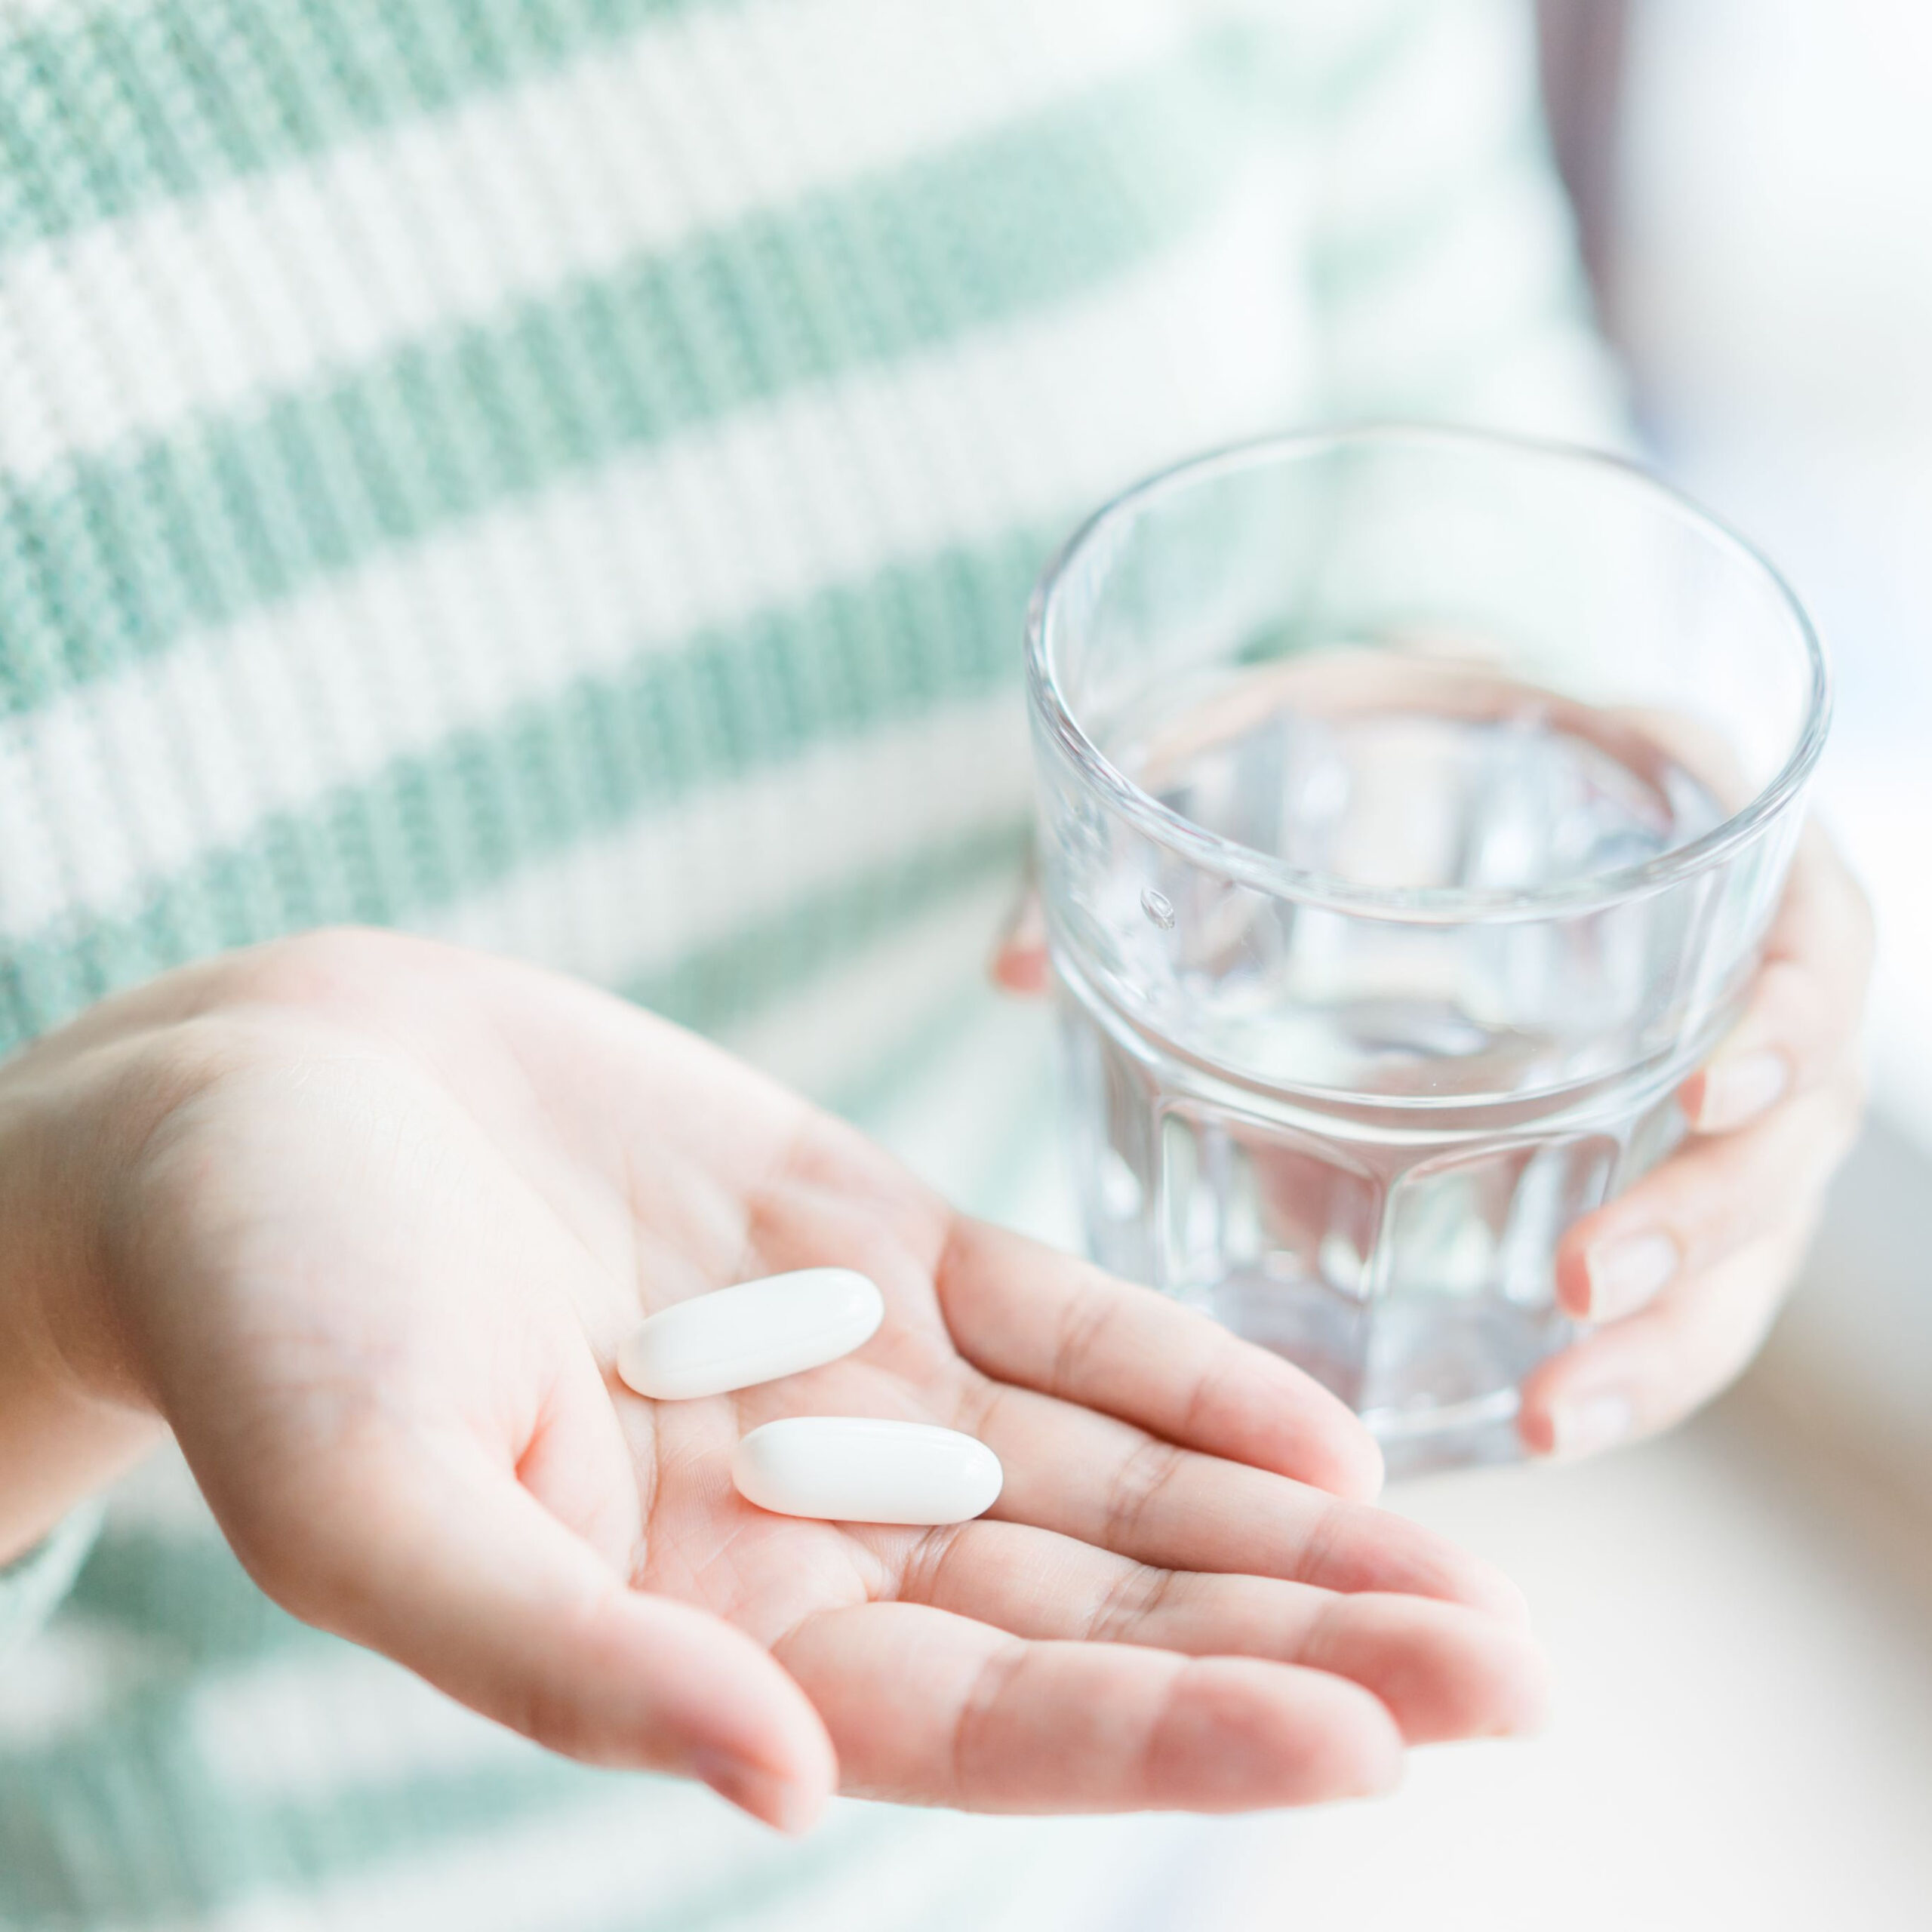 calcium supplements in hand with water